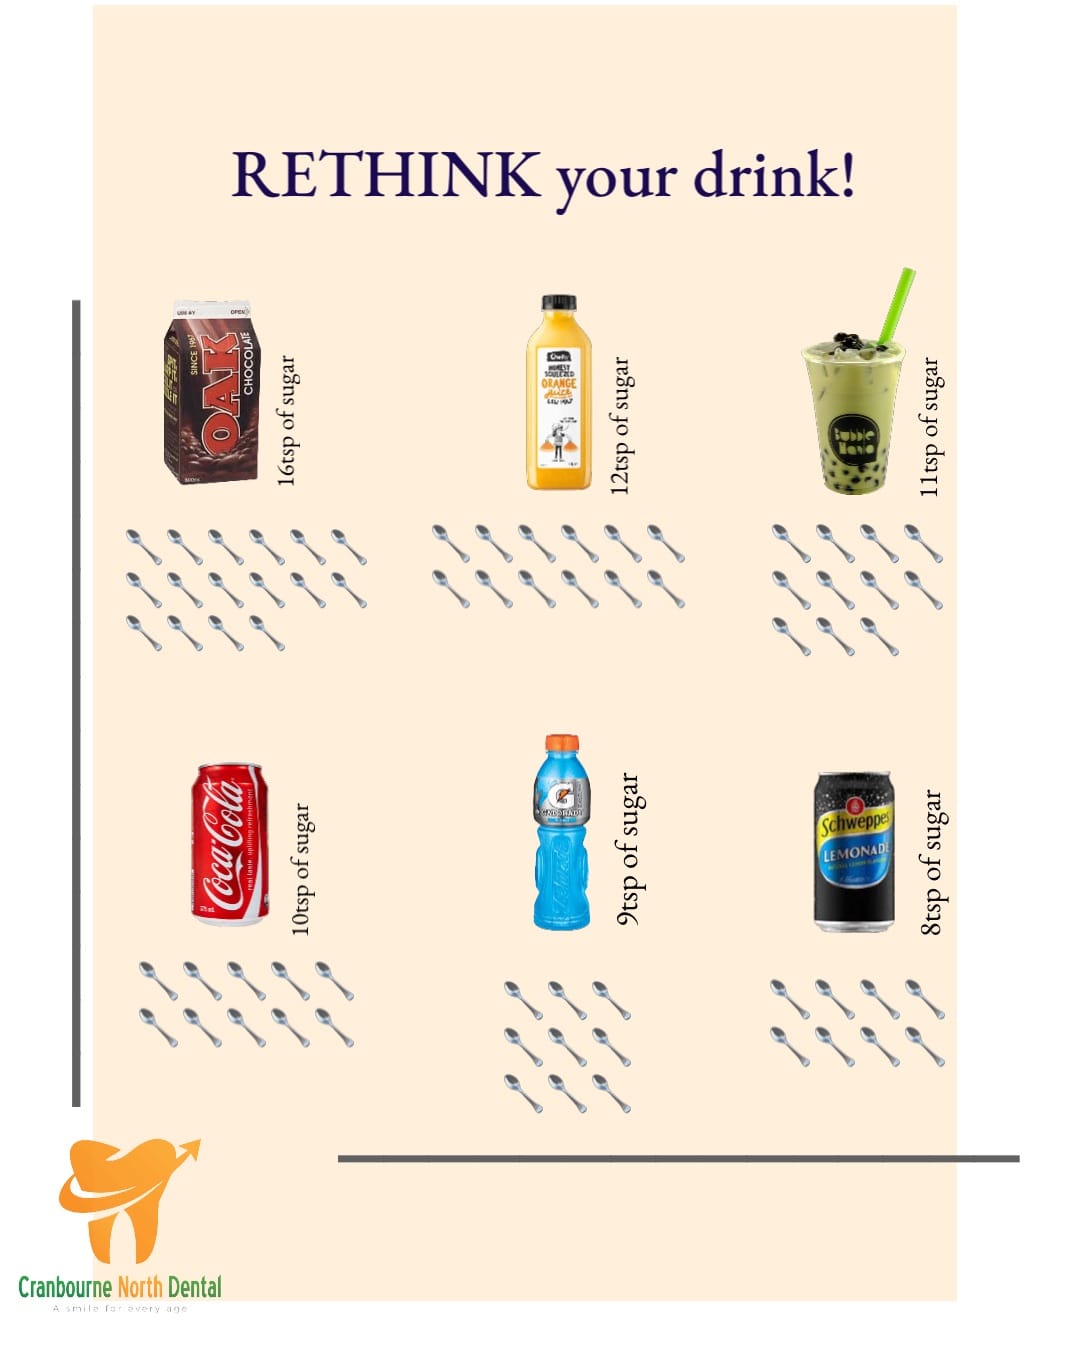 Rethink your drink – Sugar!